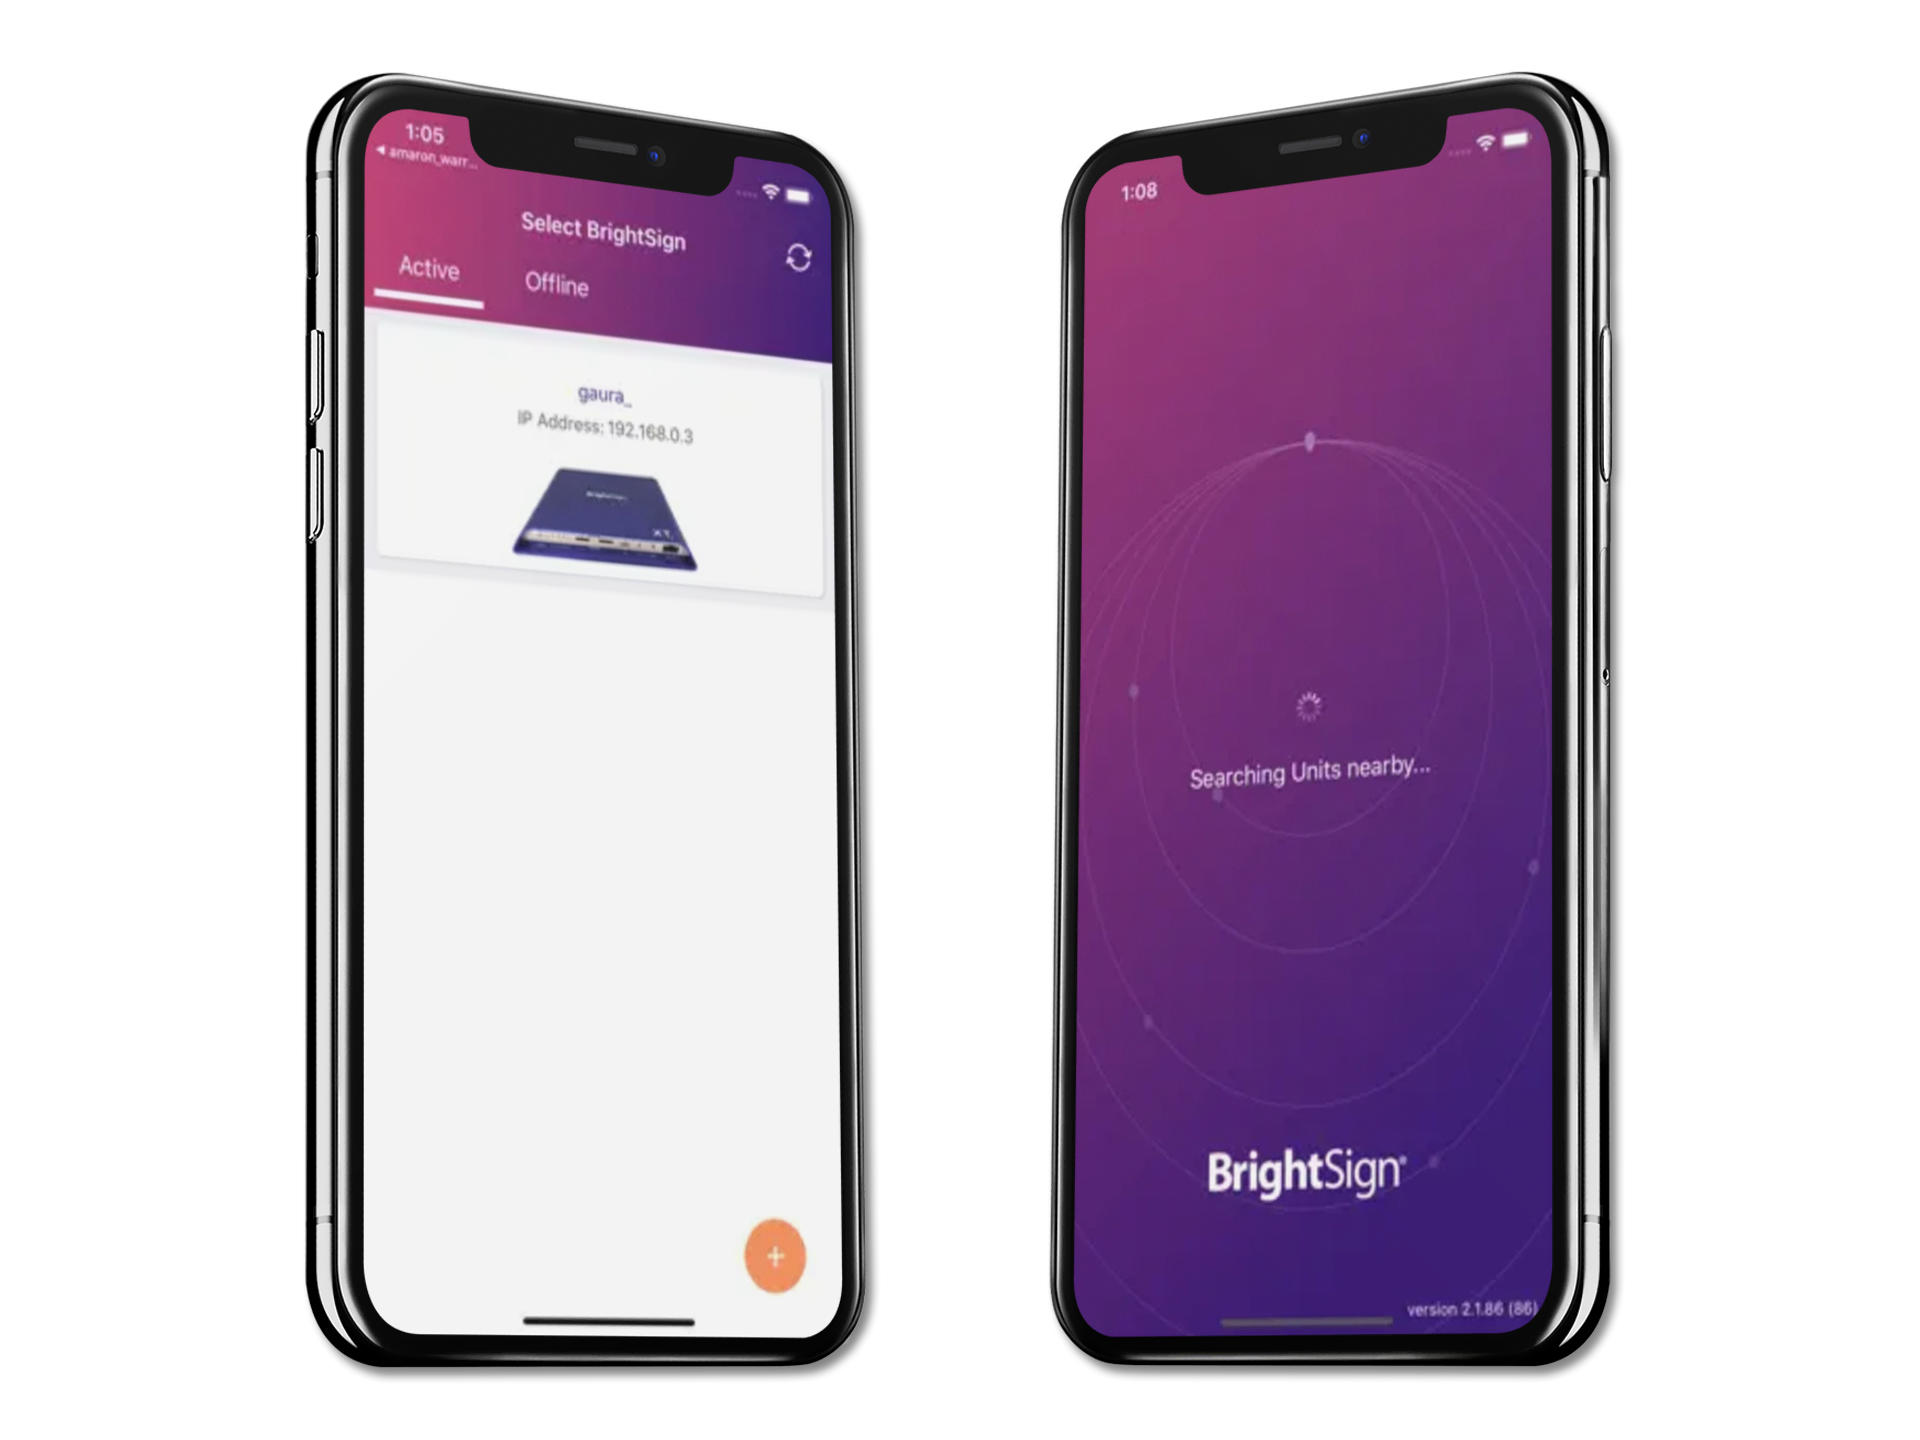 BrightSign-app weergegeven op twee iPhone X-telefoons